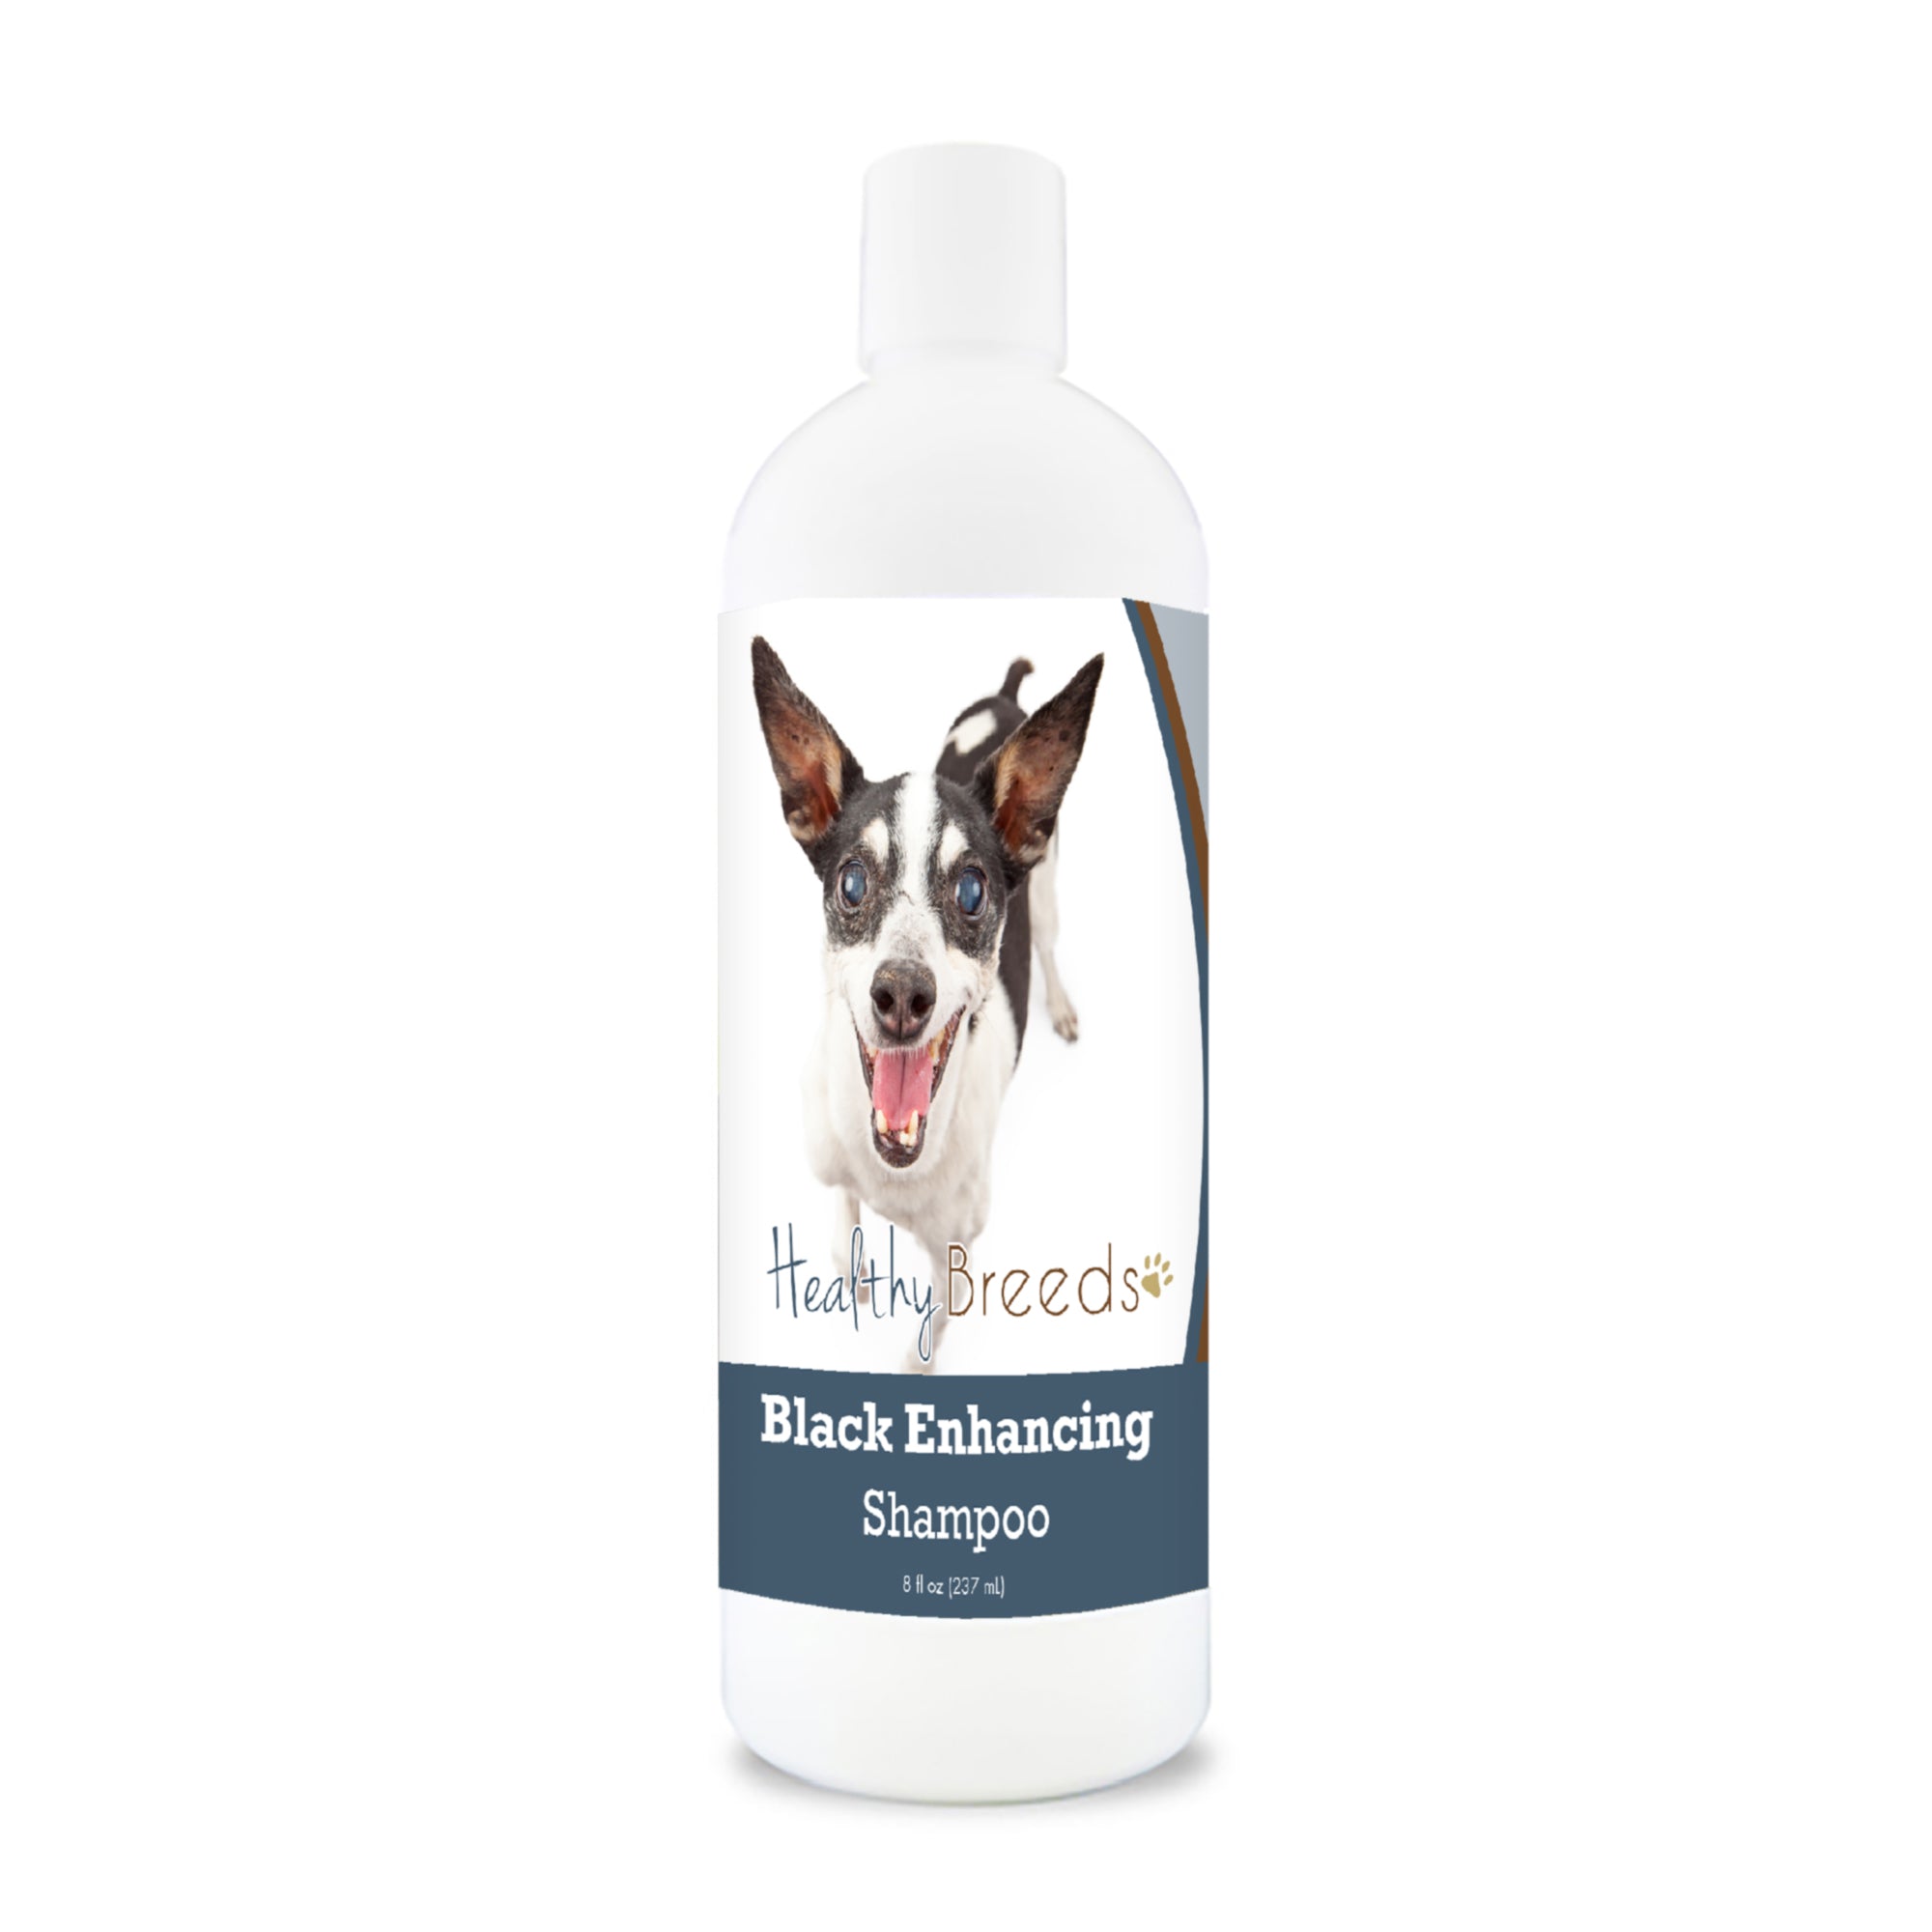 Rat Terrier Black Enhancing Shampoo 8 oz